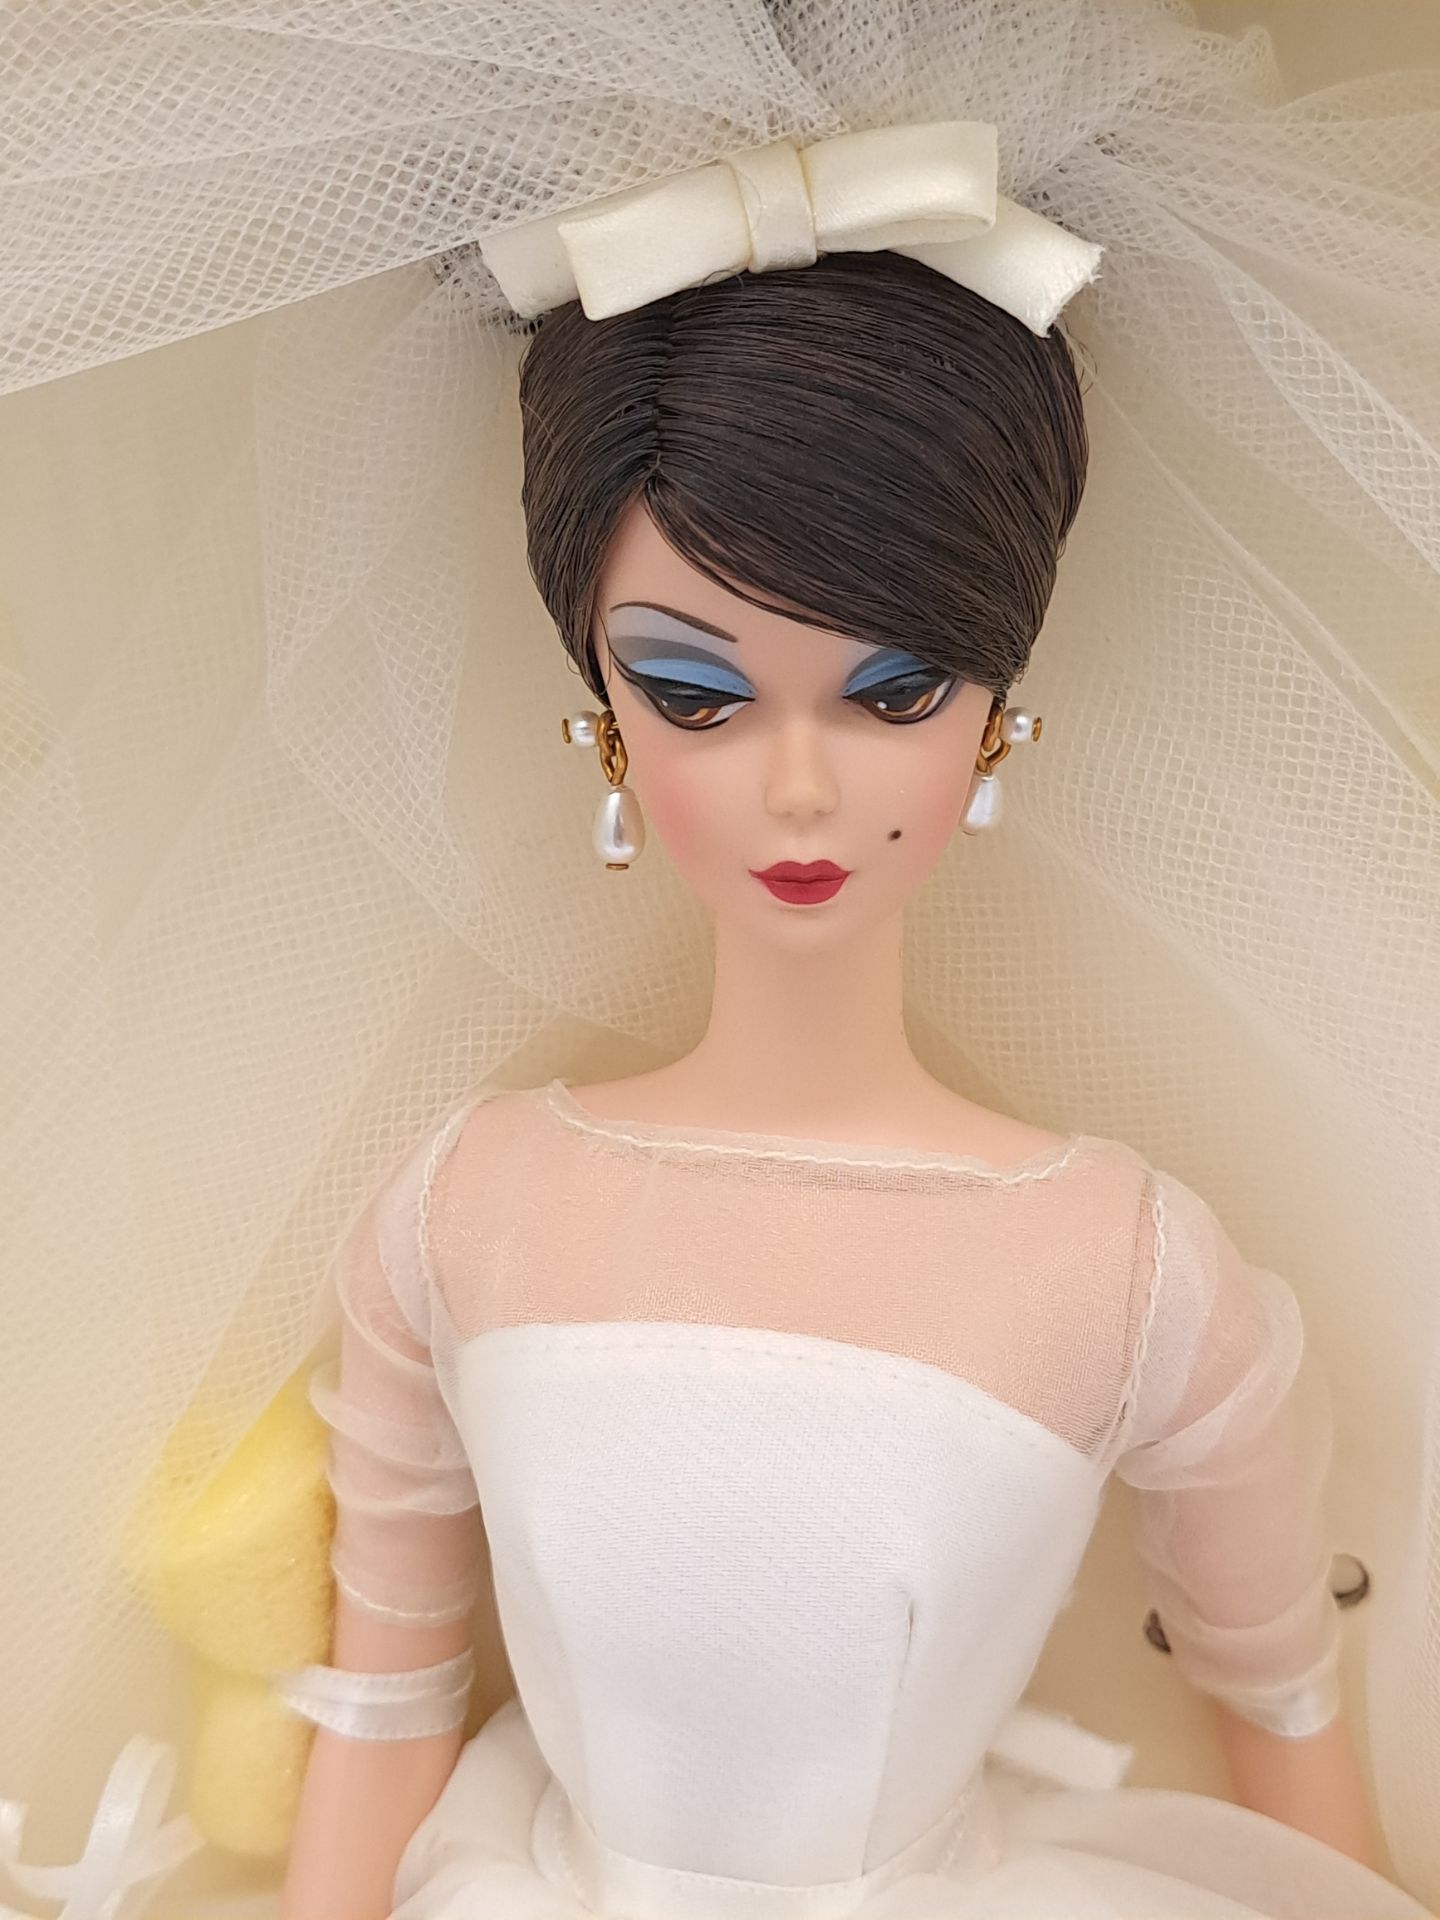 Mattel Barbie Silkstone Maria Therese - Image 4 of 4